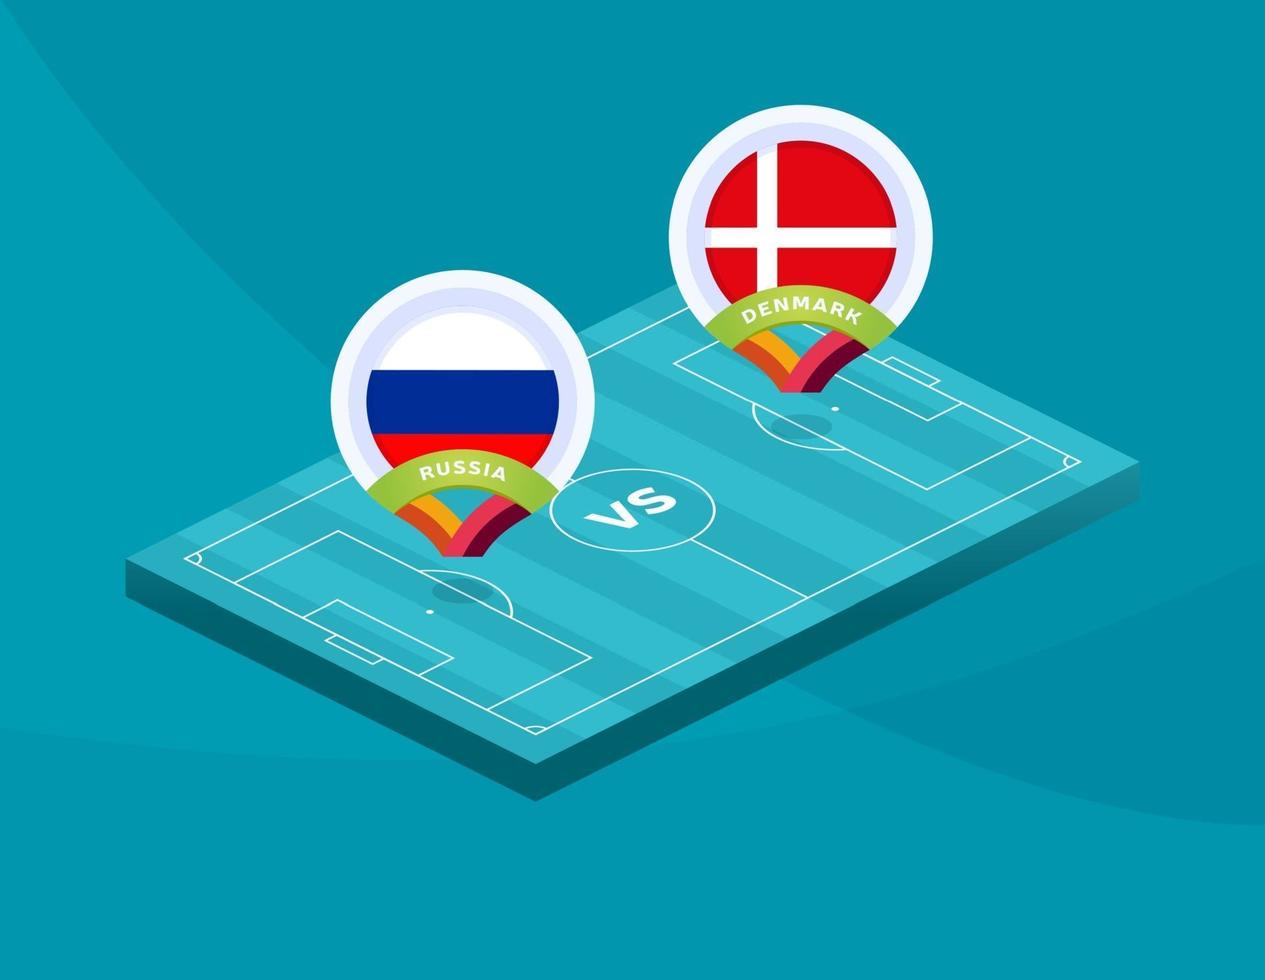 Rusland vs Denemarken voetbal vector